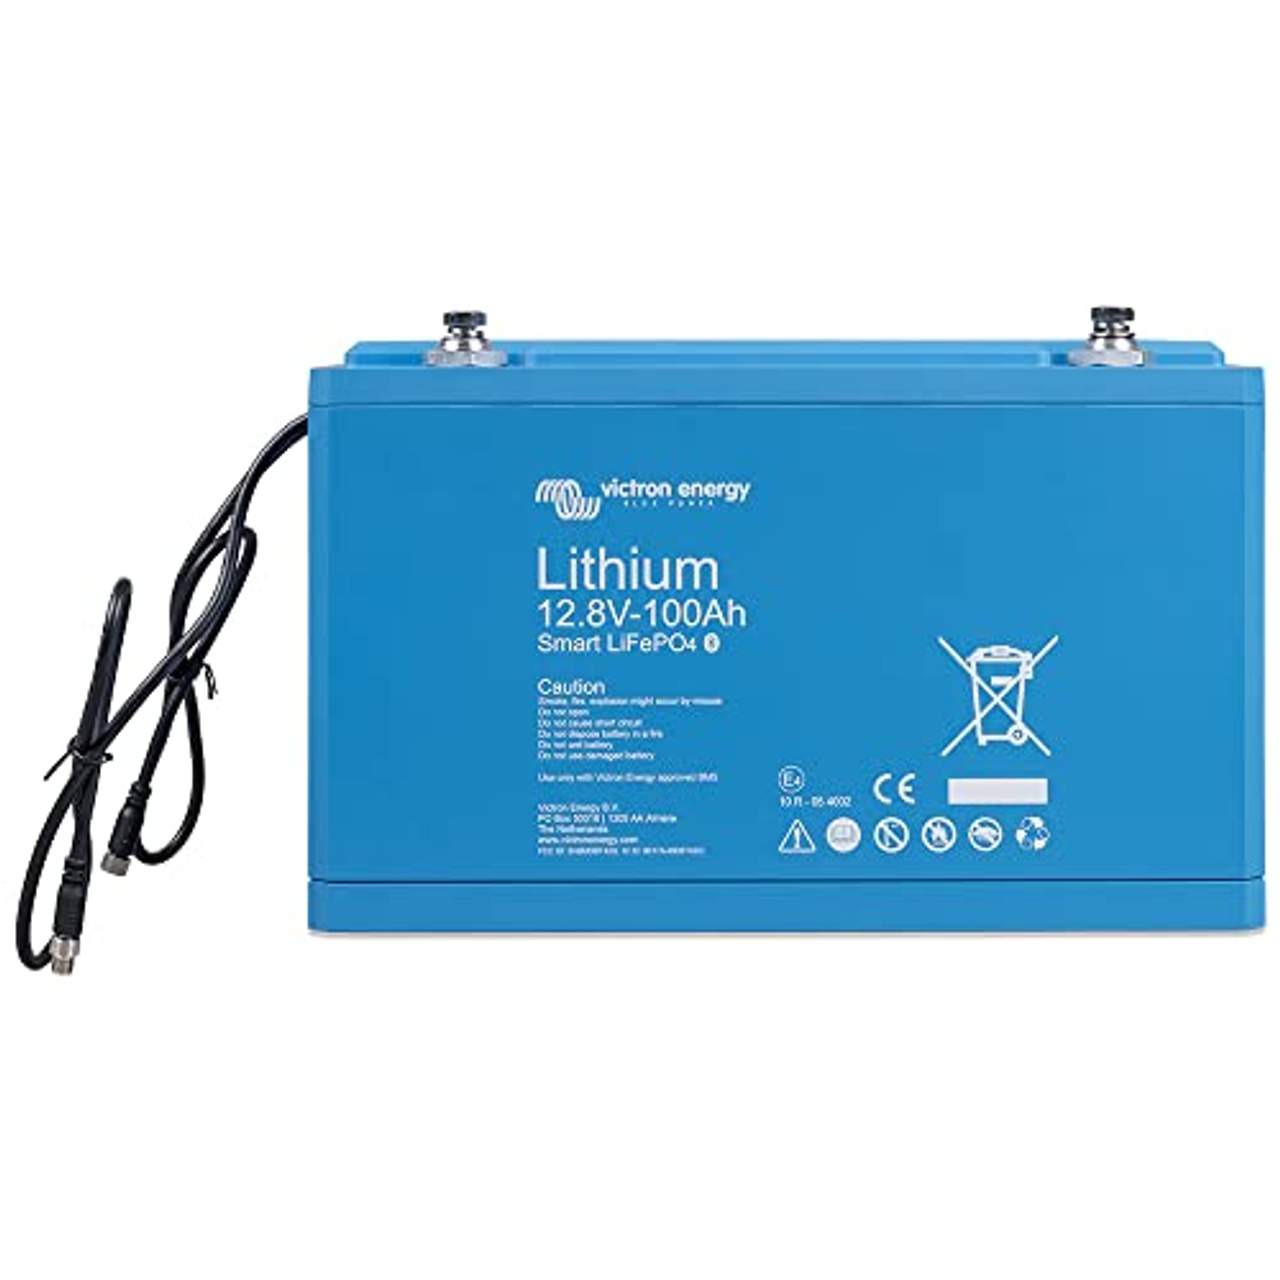 Victron Energy Lithium-Eisenphosphat-Batterie 12,8V/100Ah Smart